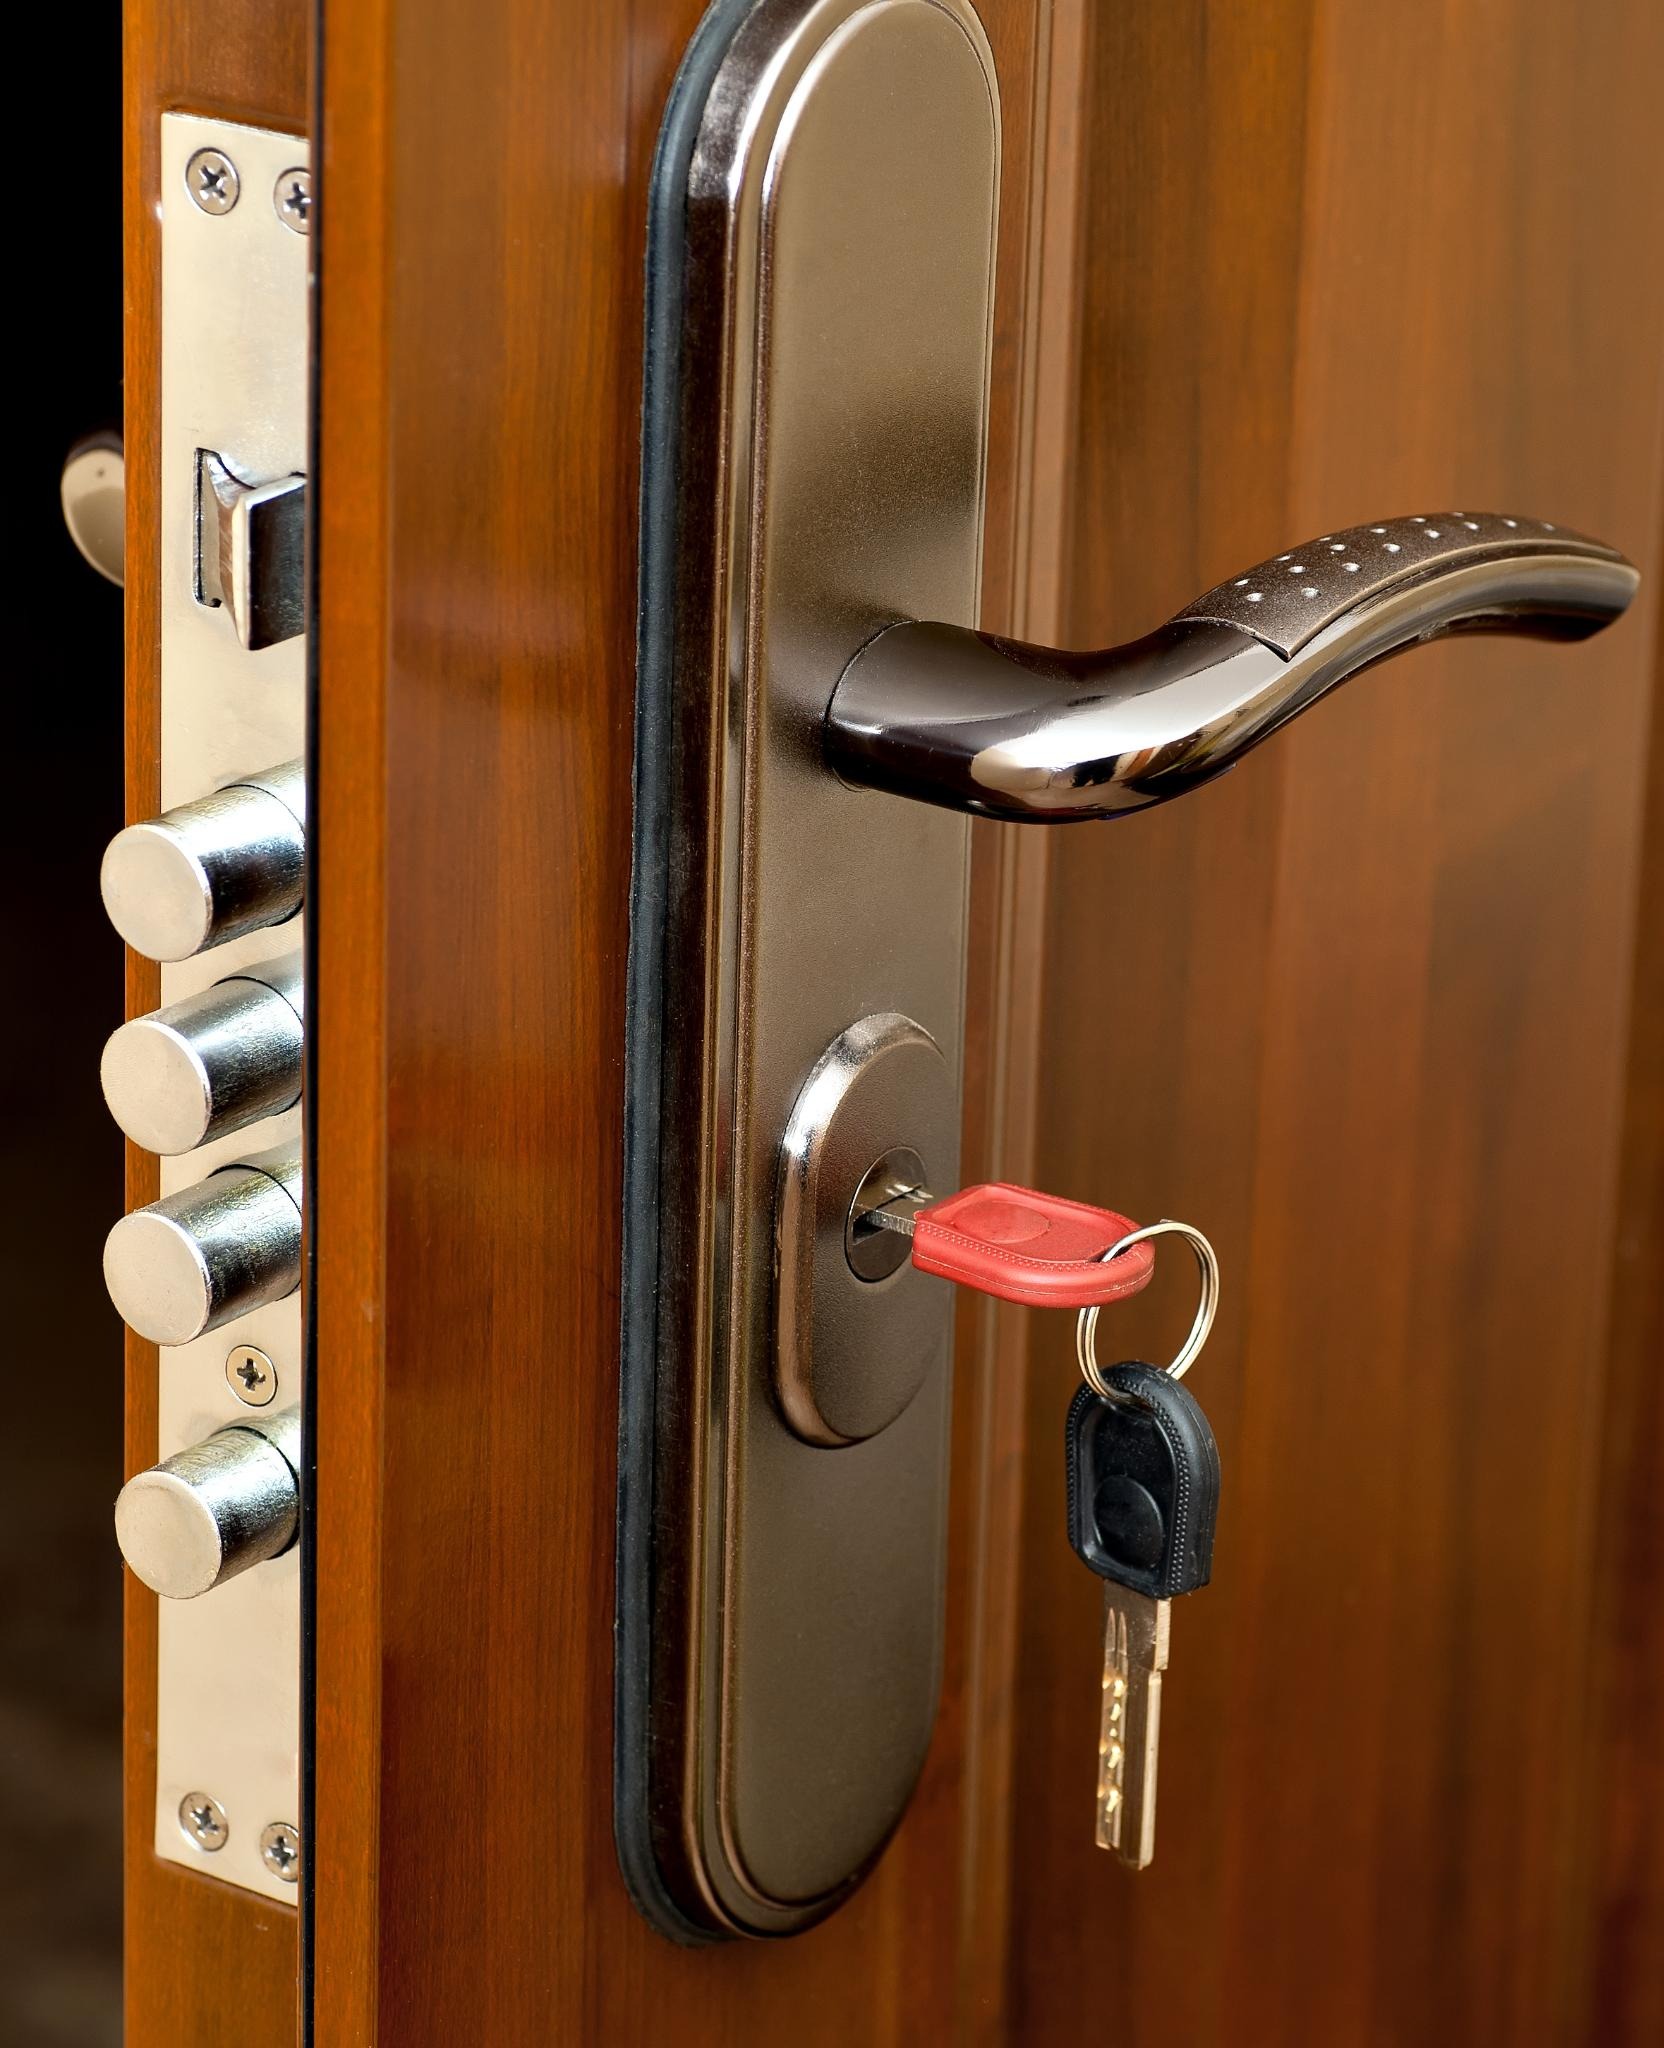 Security Door Lock | Locksmith Services From Piscataway, NJ